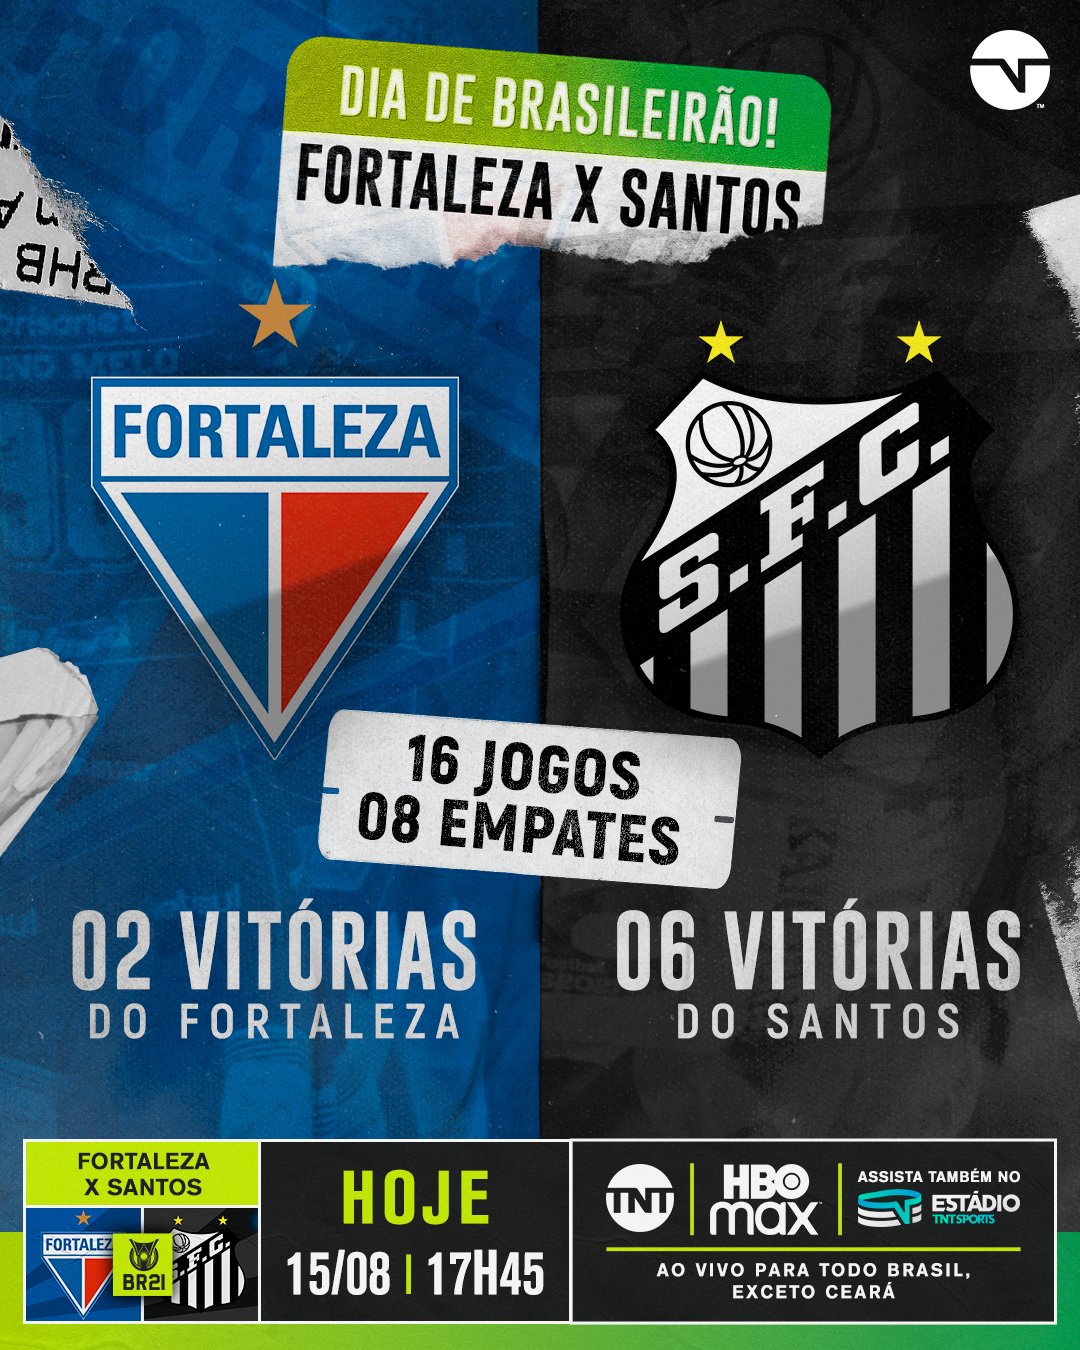 Hoje tem jogo importante no - TNT Sports Brasil